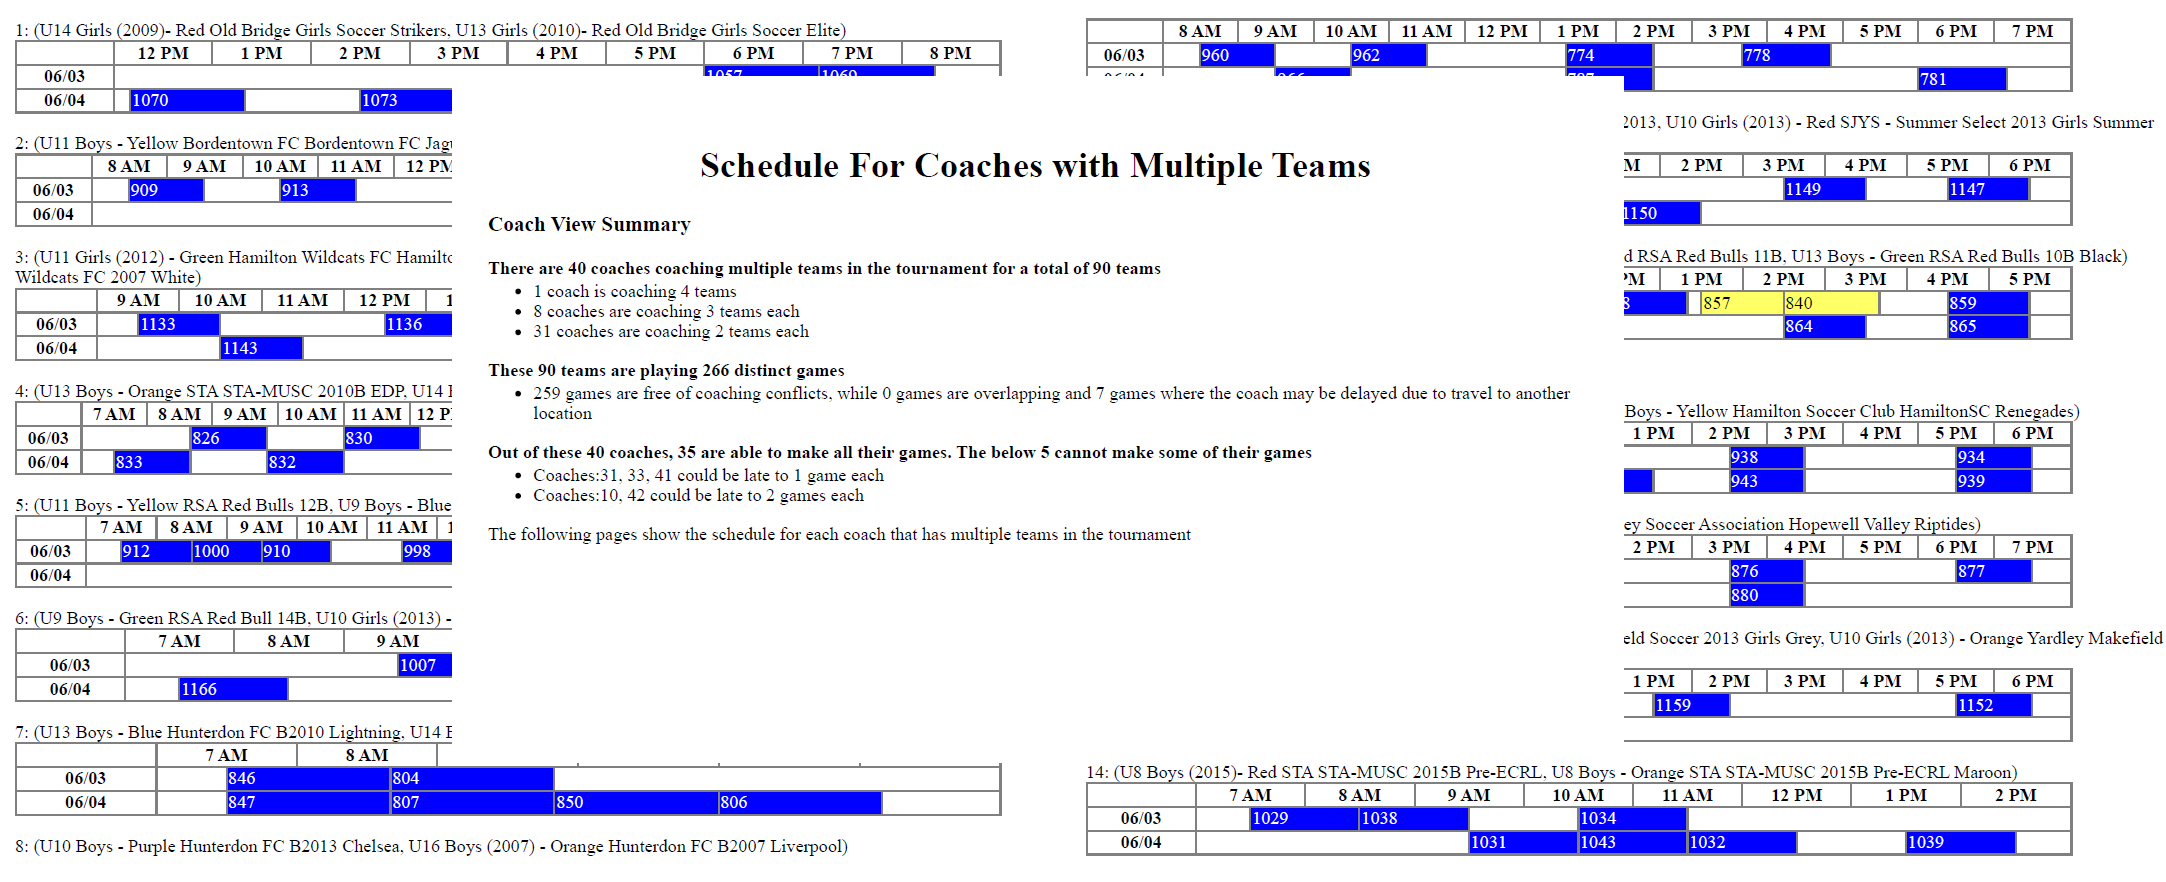 Complete Coach Schedule